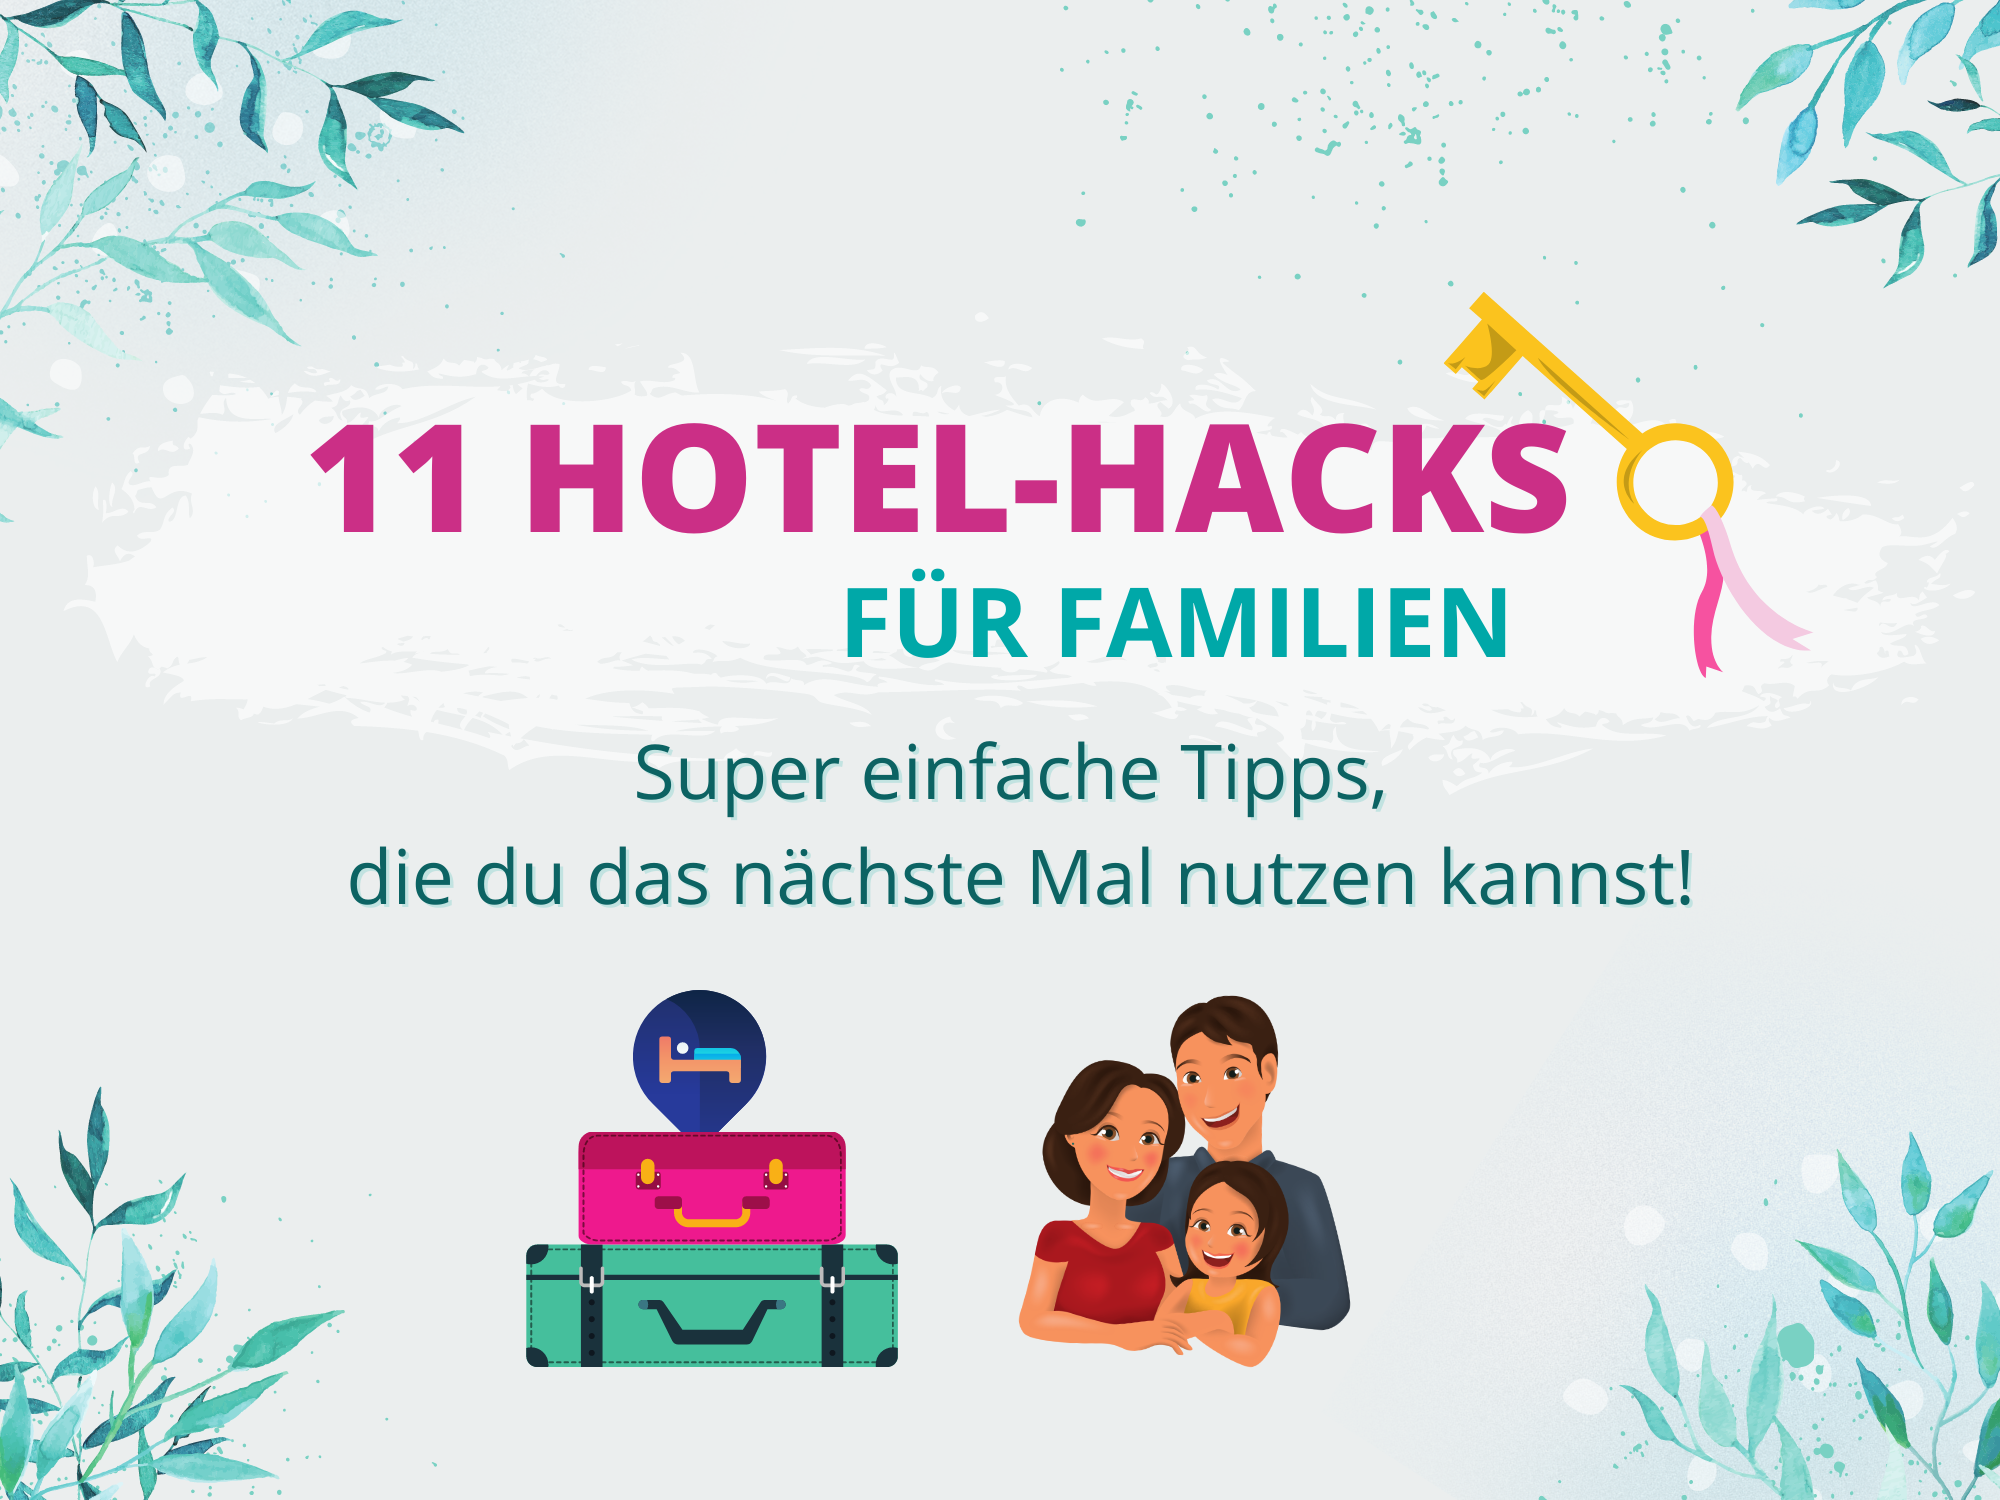 Hotel-Hacks